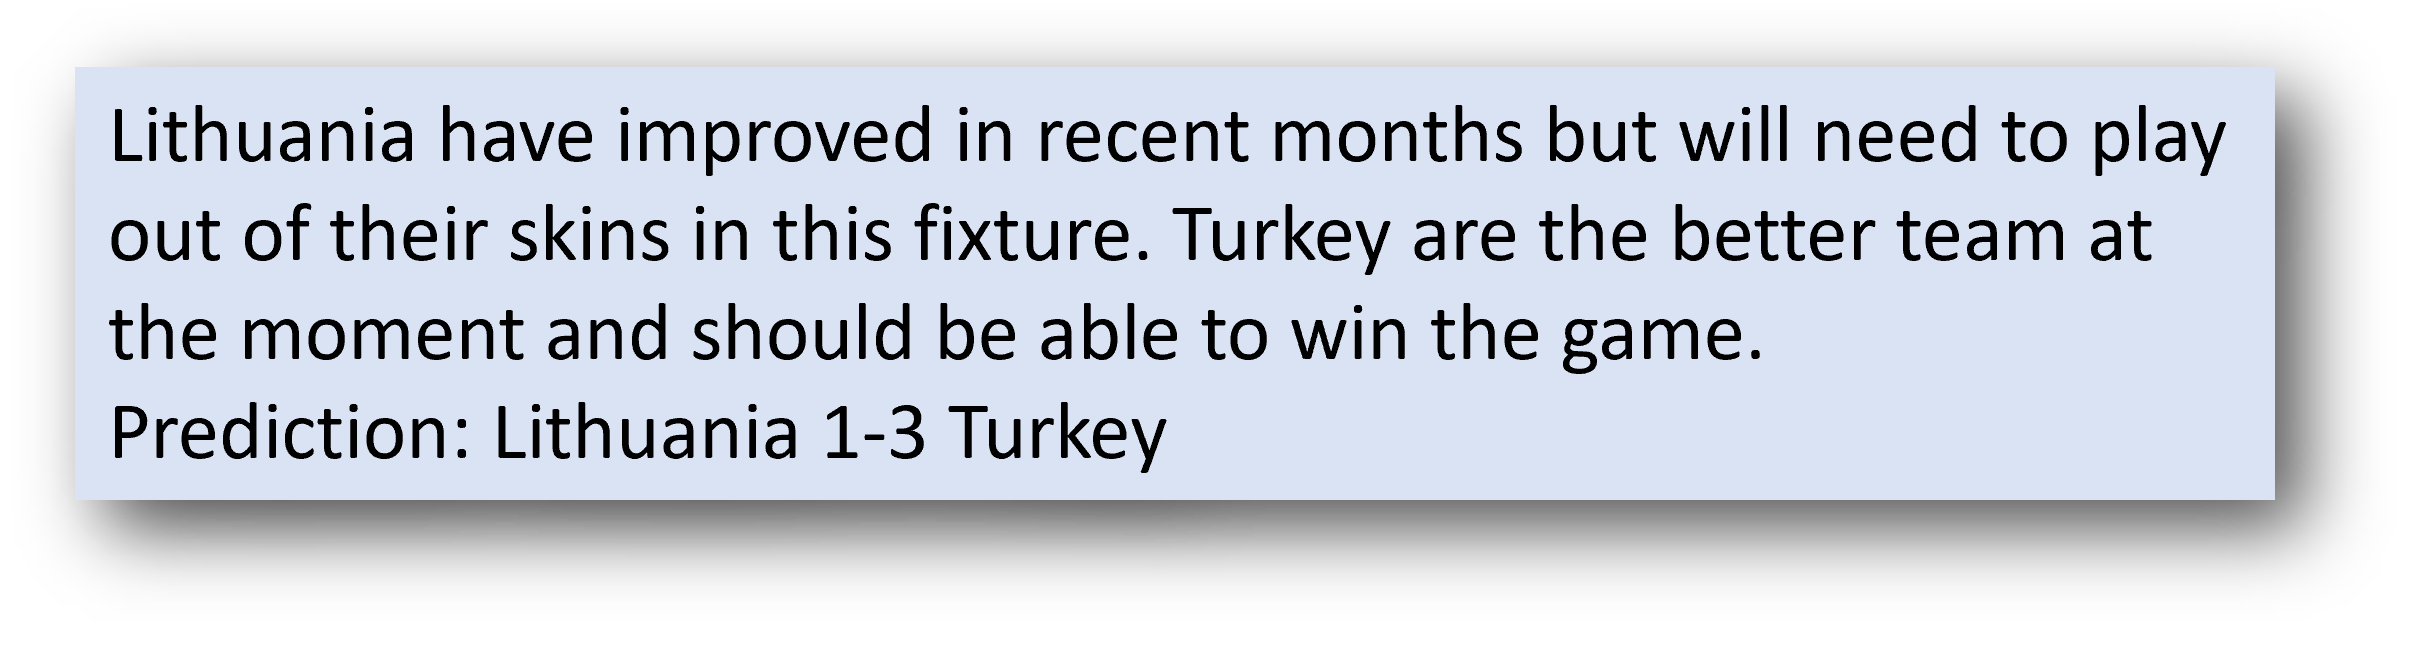 Lithuania vs Turkey Prediction